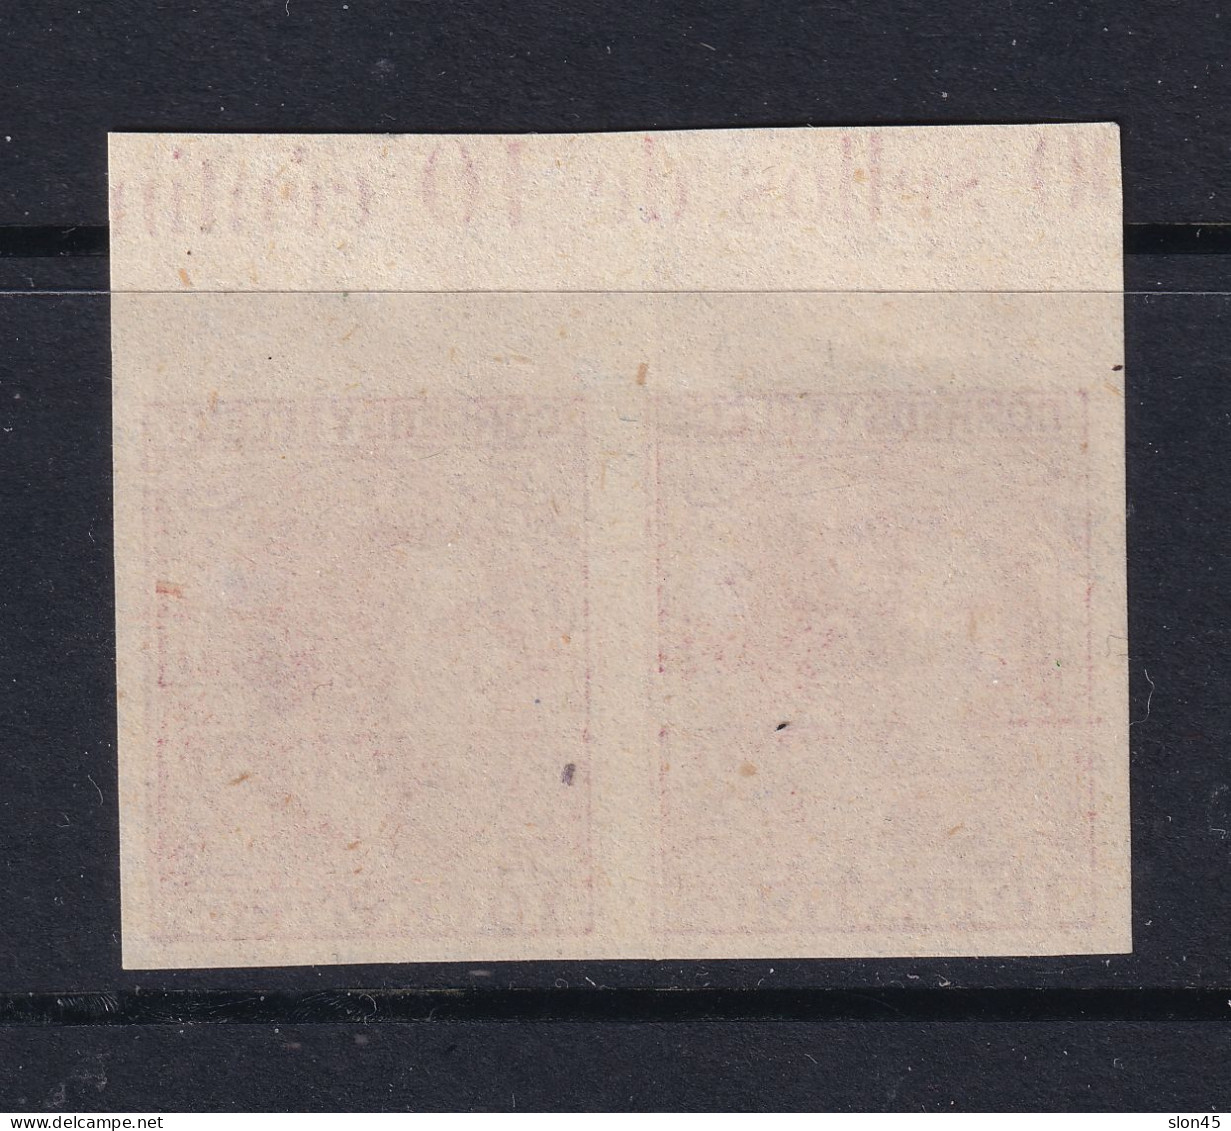 Spain 1879 1c Double Print  One Inverted Imperf MNG 16028 - Fehldrucke